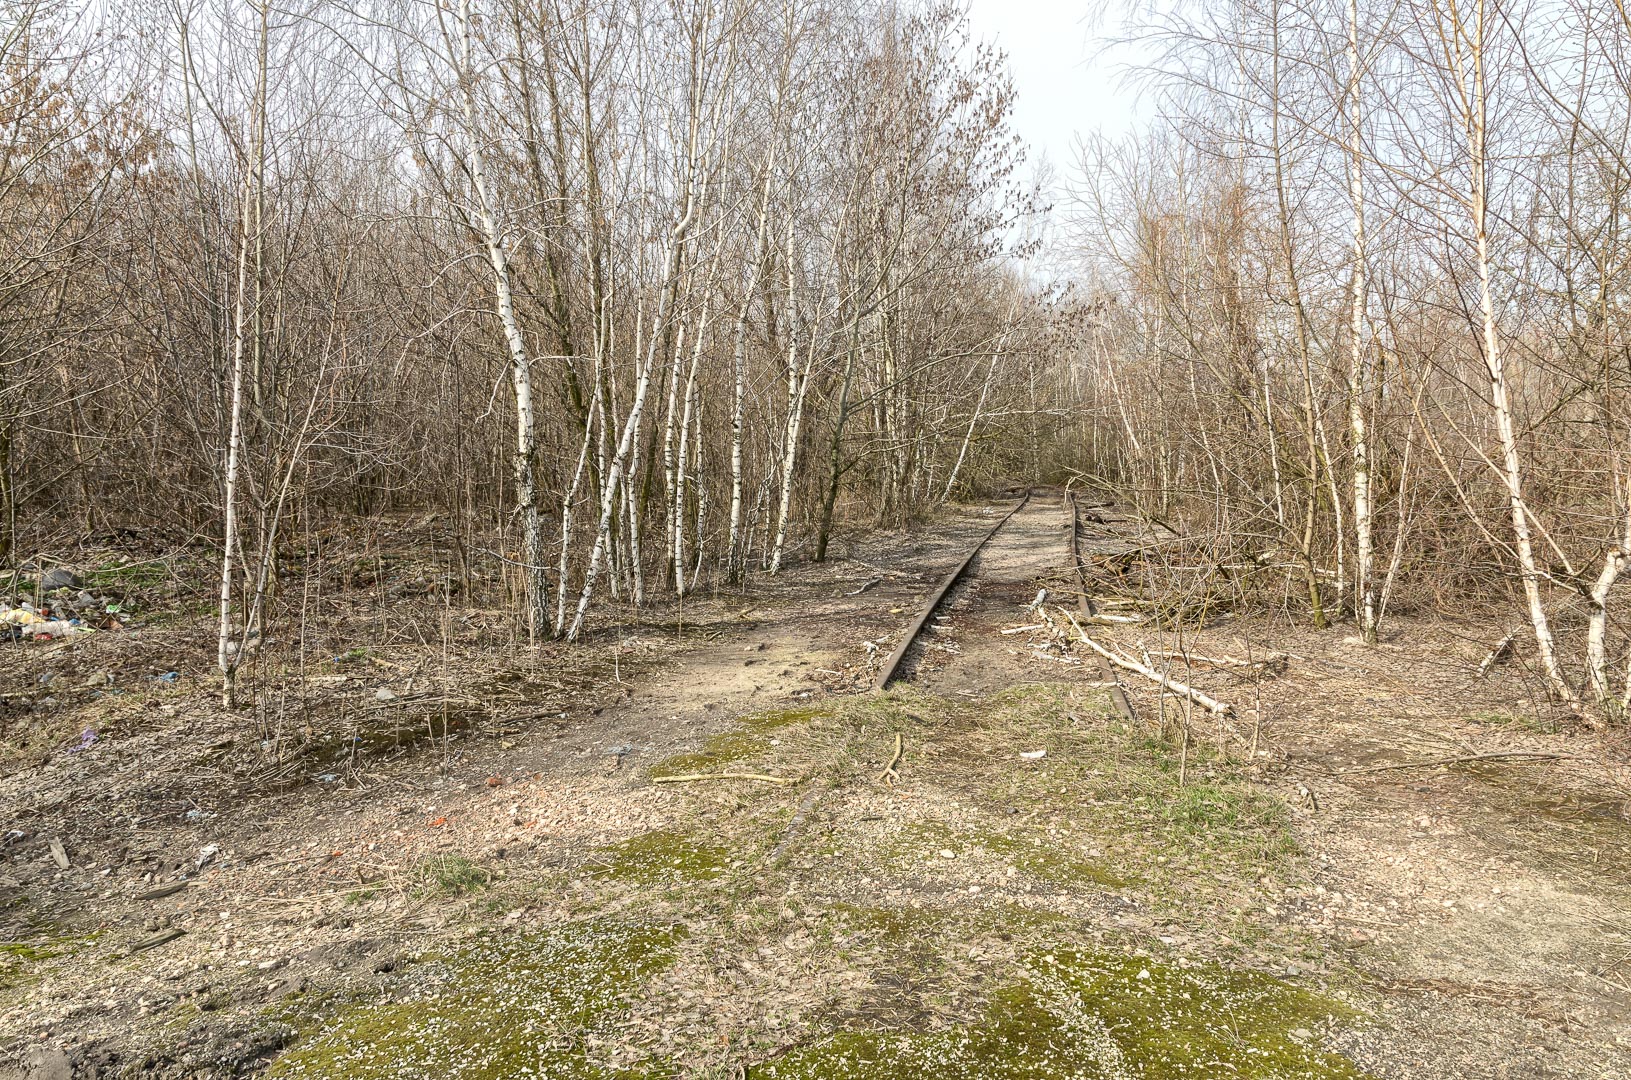 Backplate • ID: 7430 • HDRI Haven - Barren Terrain By Old Railway Track